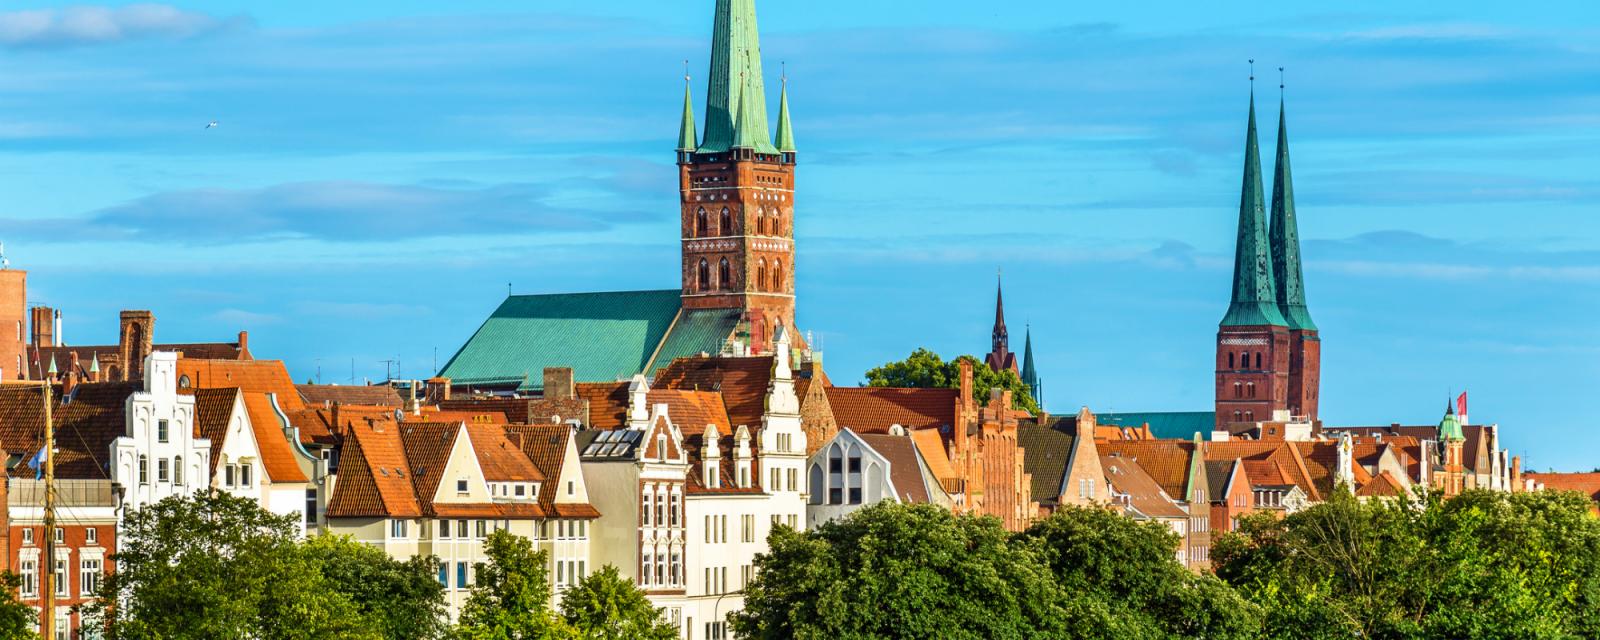 Lübeck viert 875e verjaardag met speciale tentoonstelling  